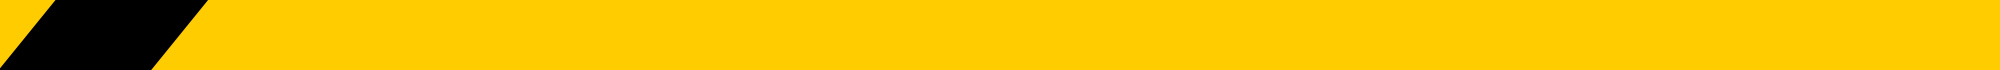 yellow bar